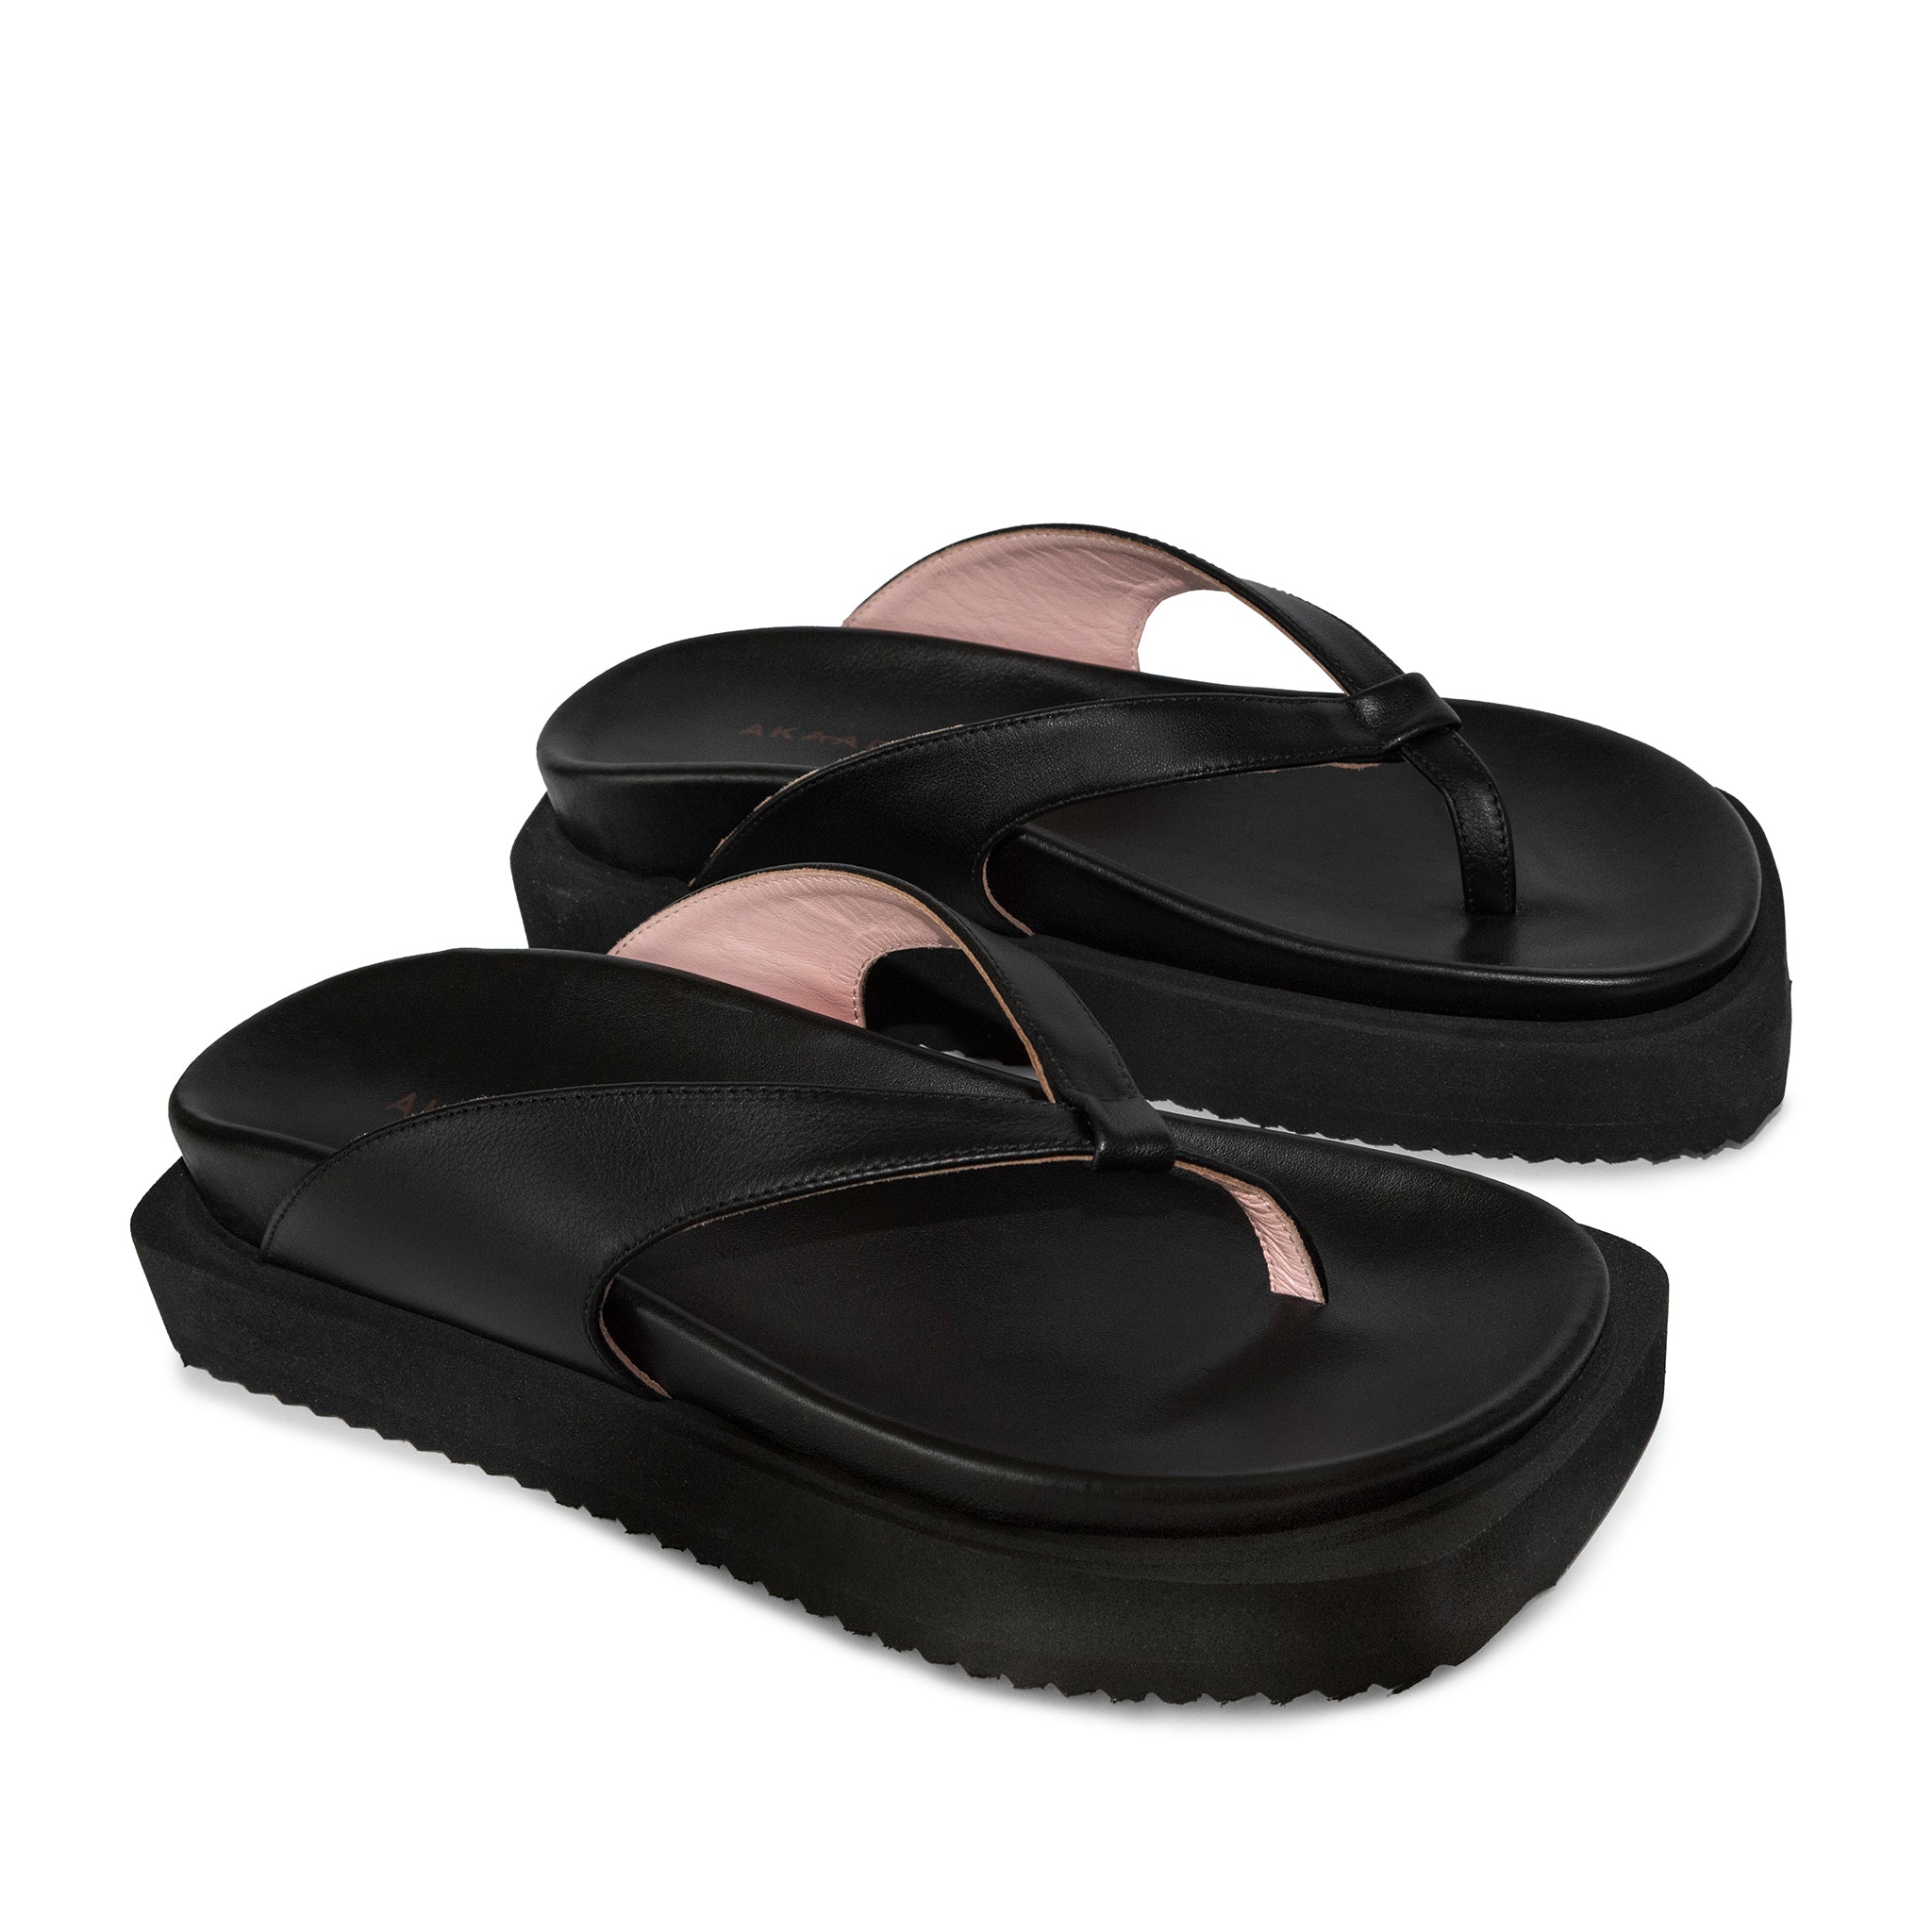 Sora Black Leather Sandals LES23127-BLACK - 2